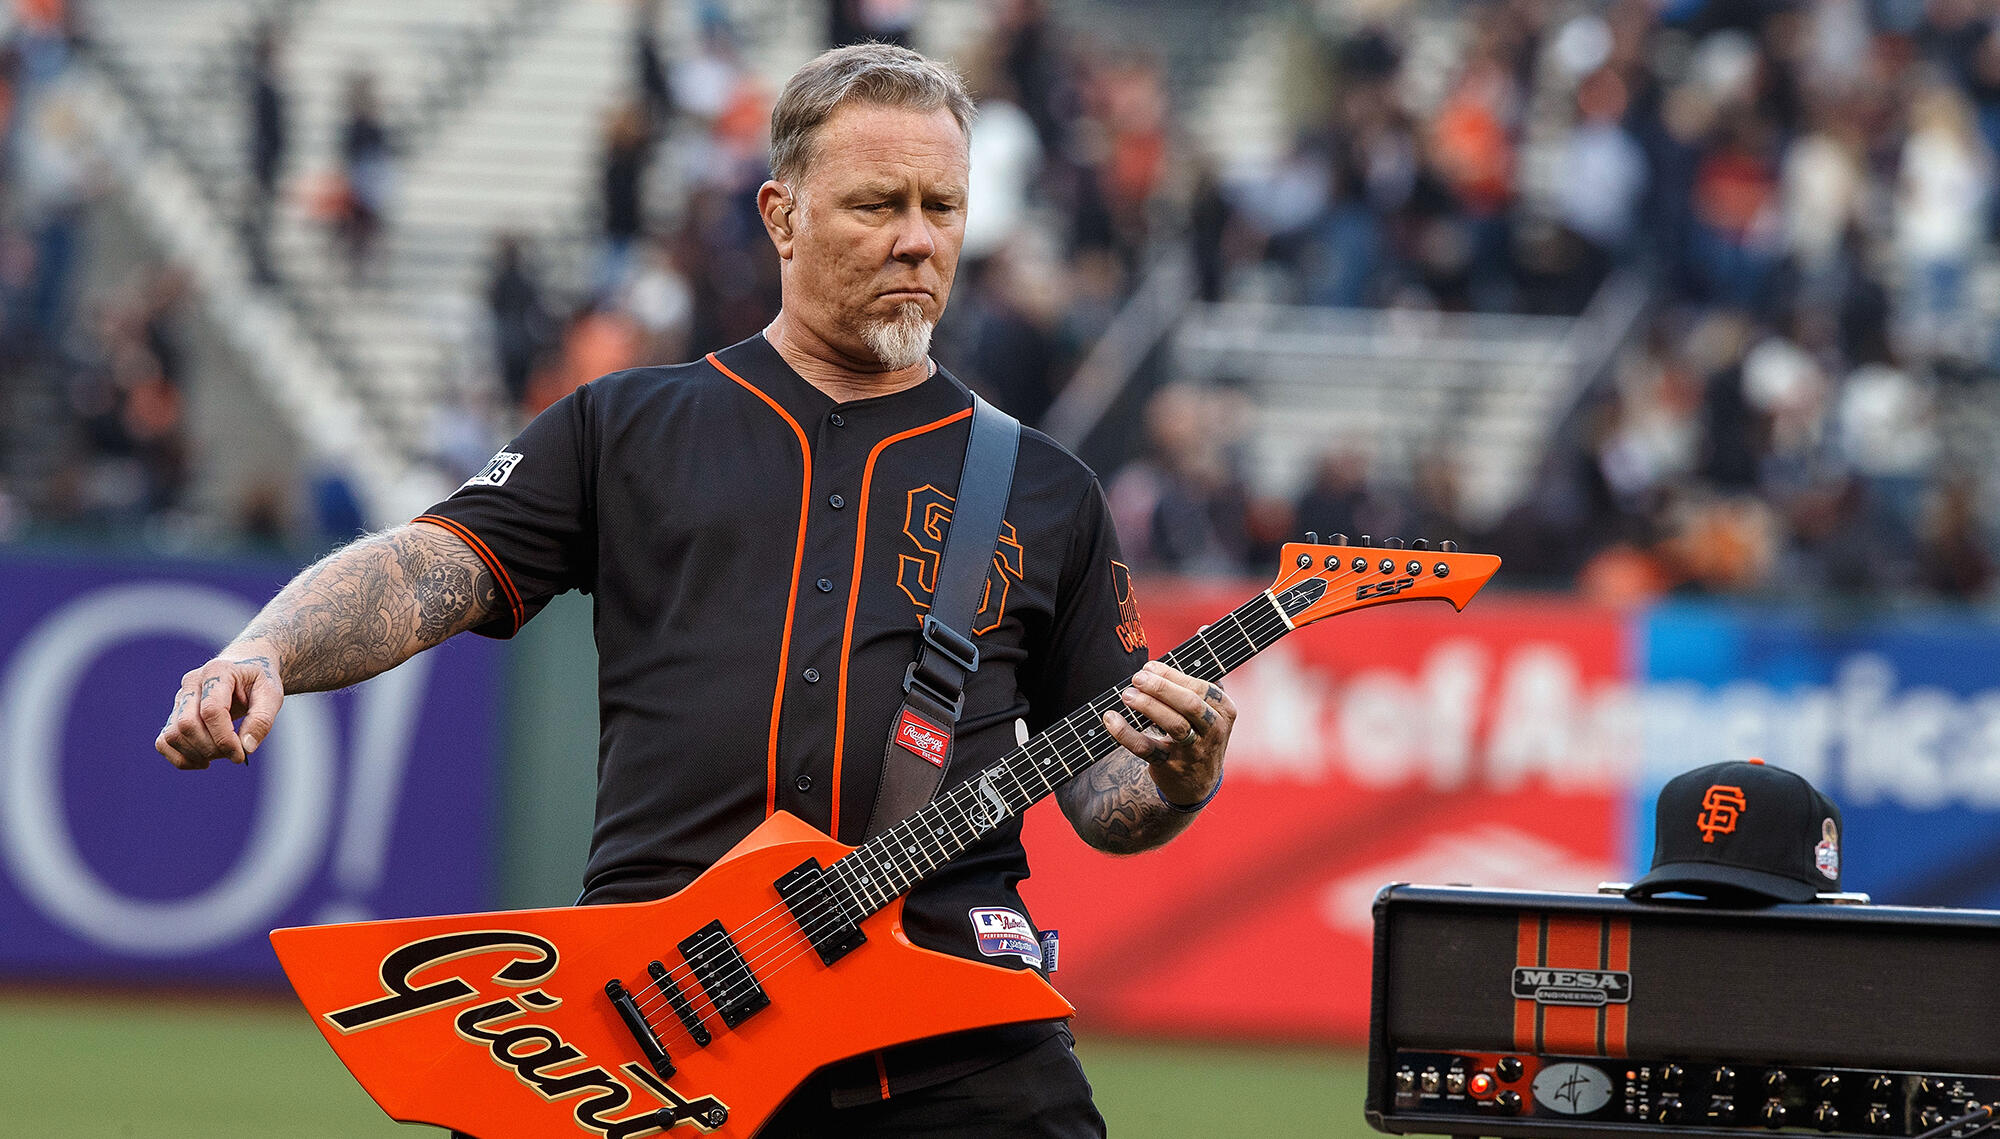 Watch Metallica perform at S.F. Giants game ahead of BottleRock